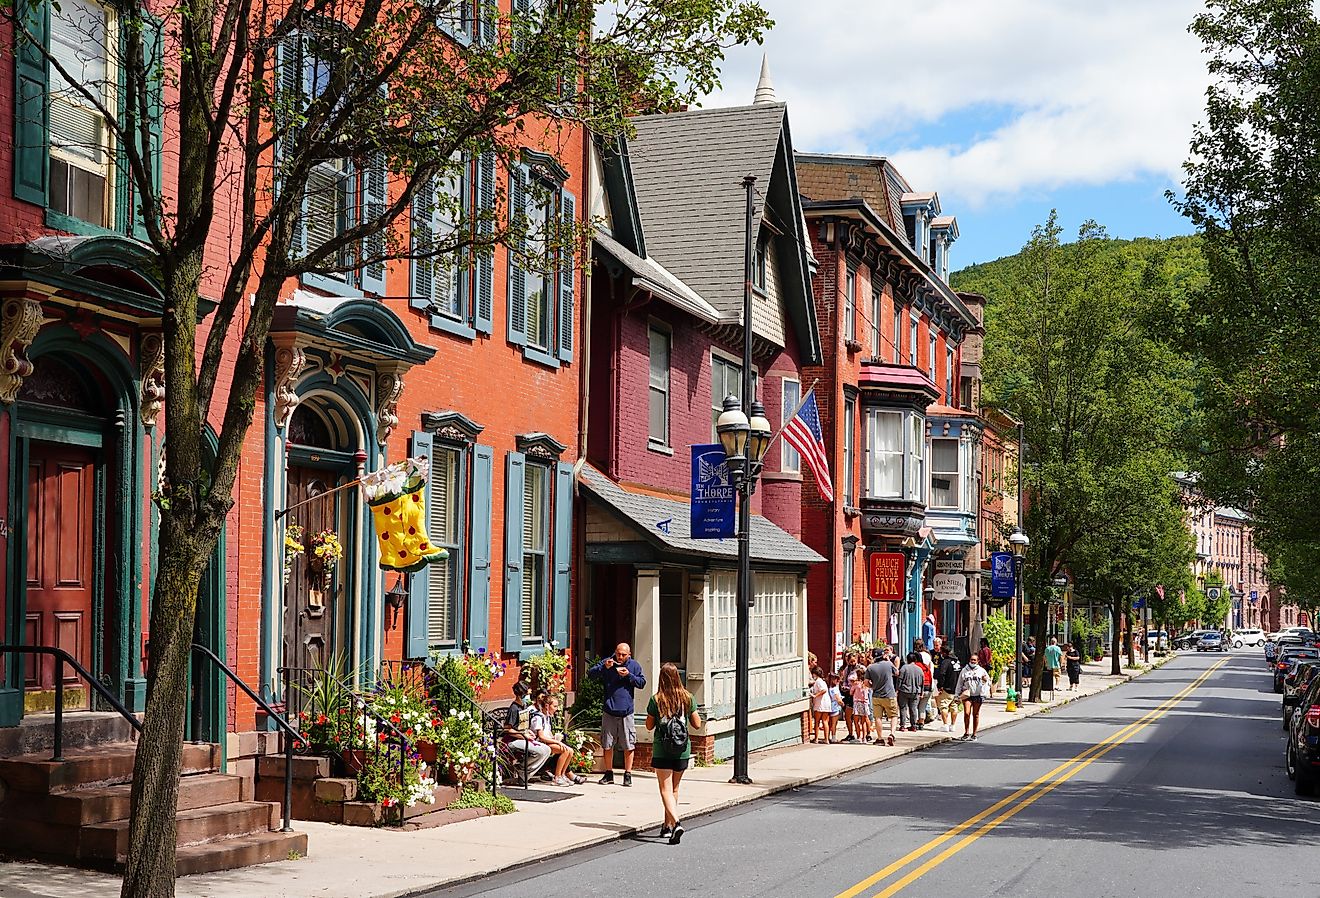 Historic town of Jim Thorpe, Pennsylvania. Image credit EQRoy via Shutterstock